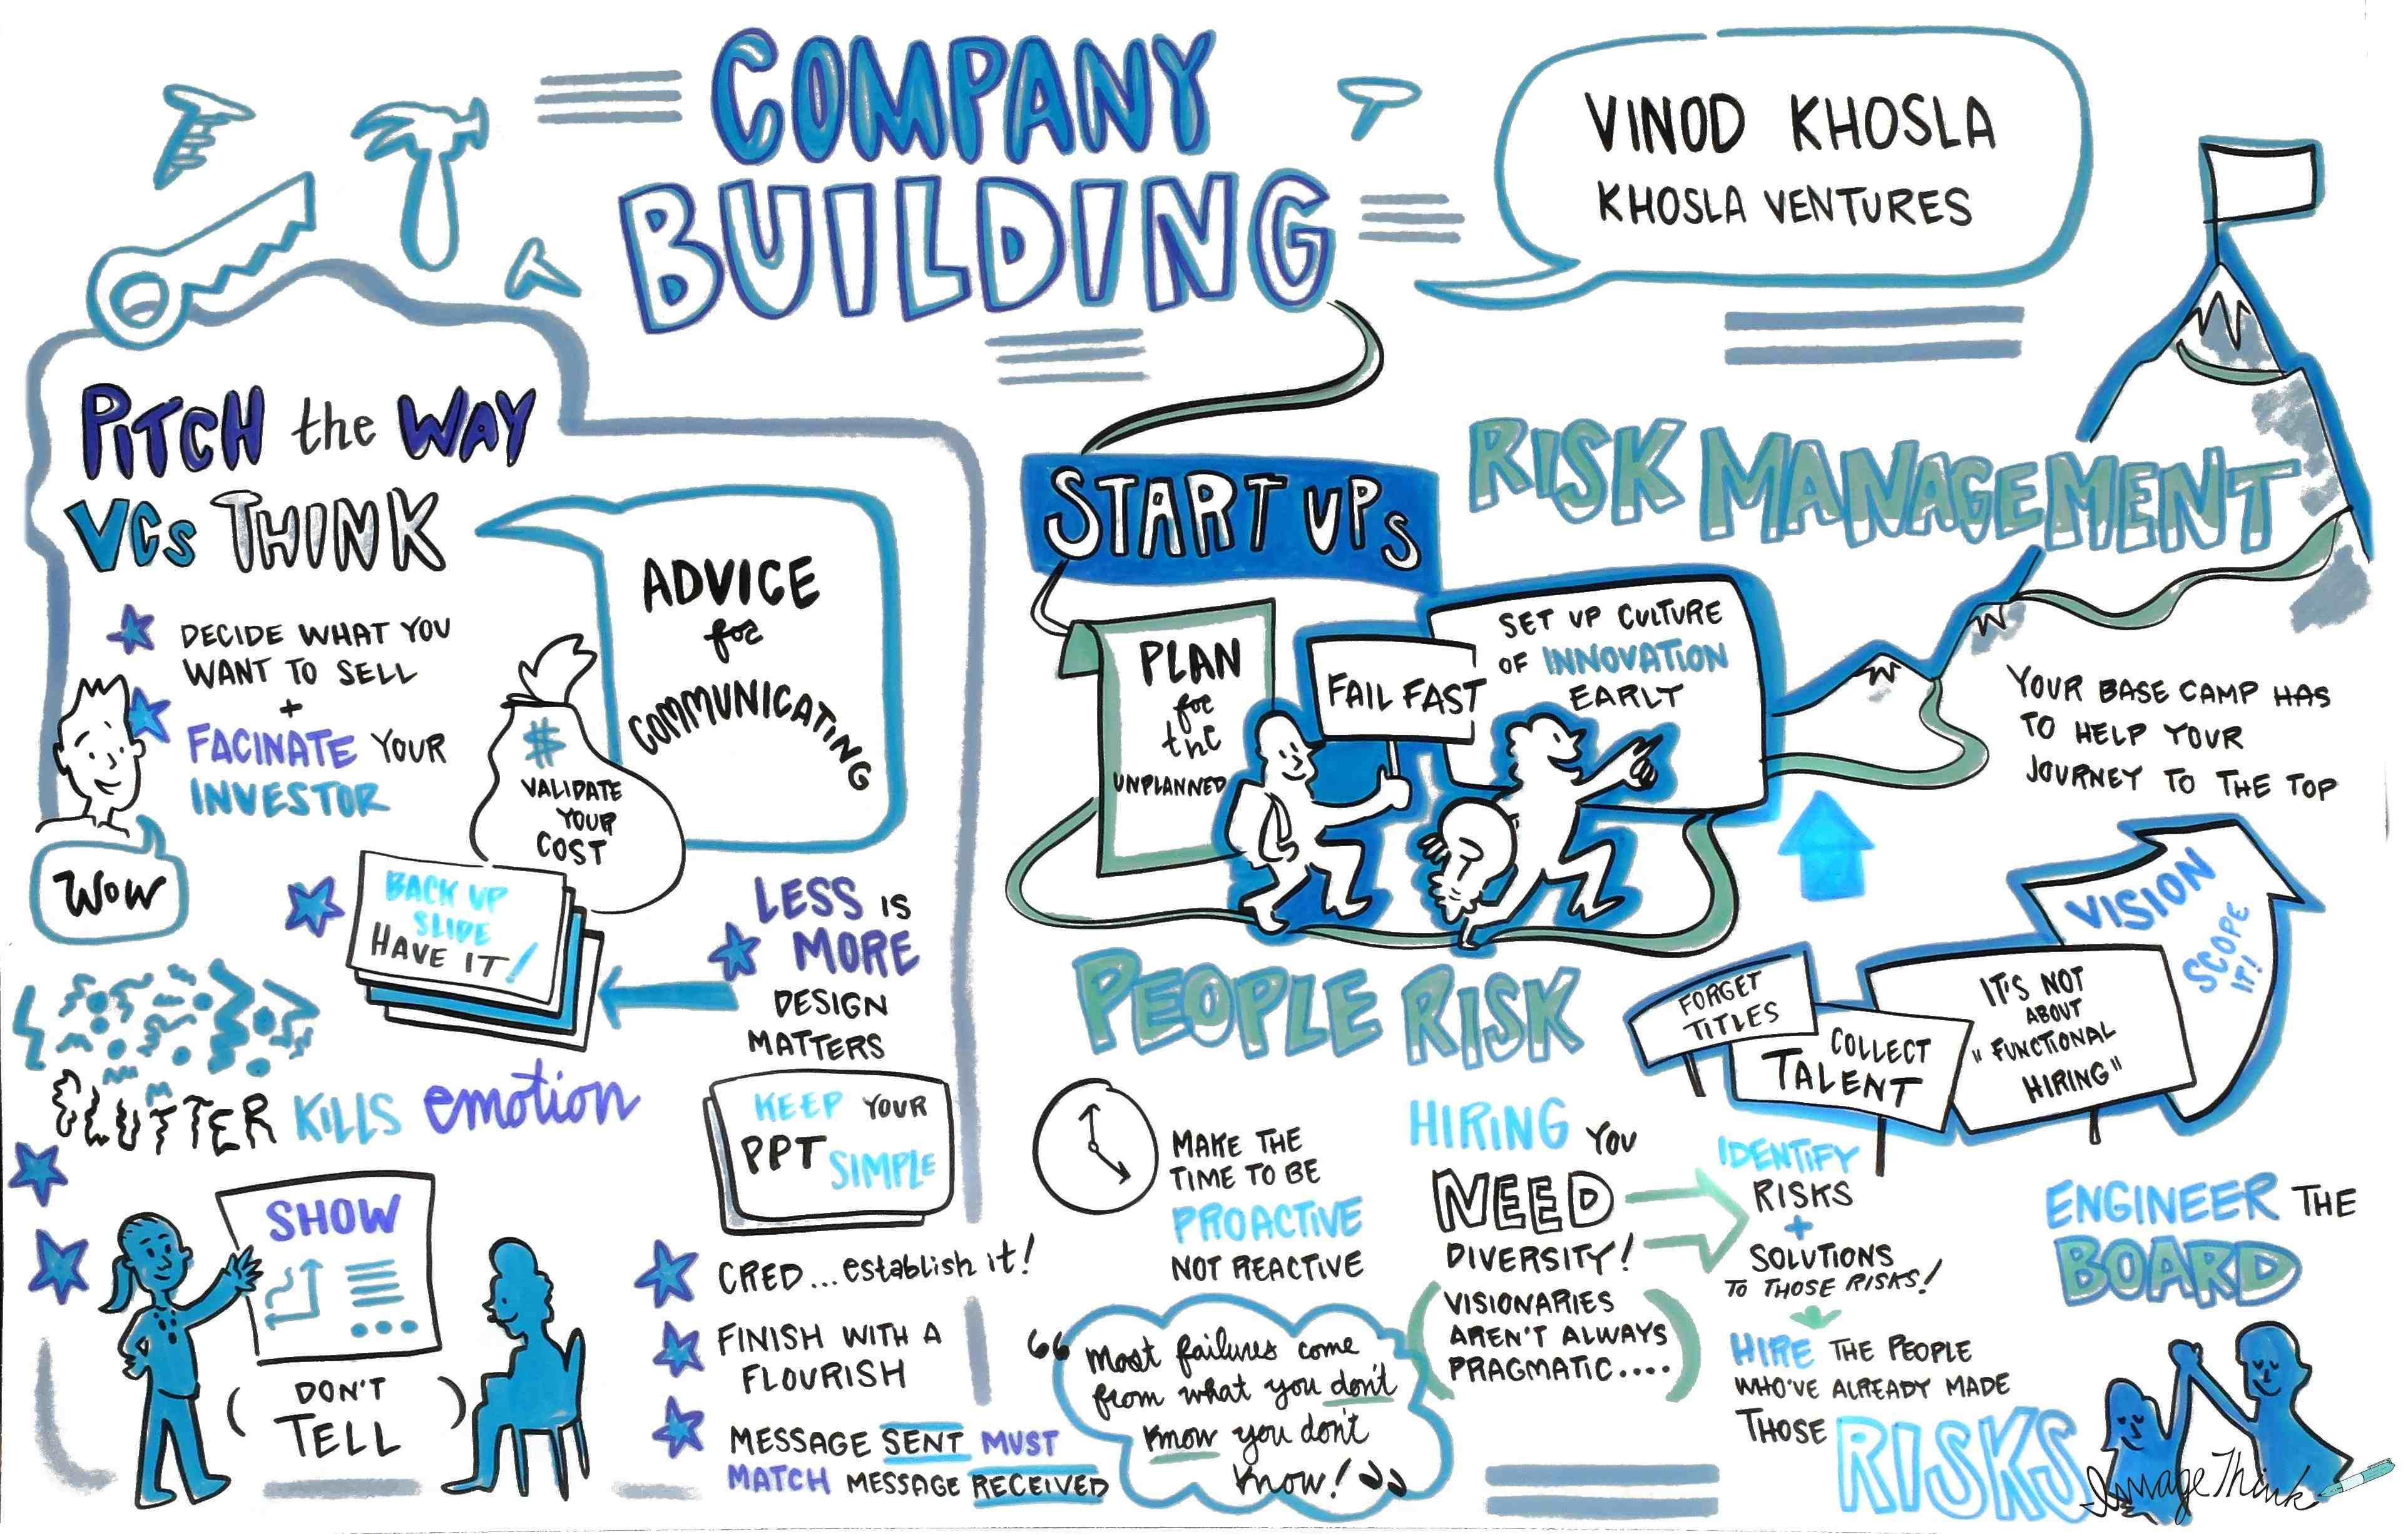 2014kv_summit_052014_companybuilding_graphic